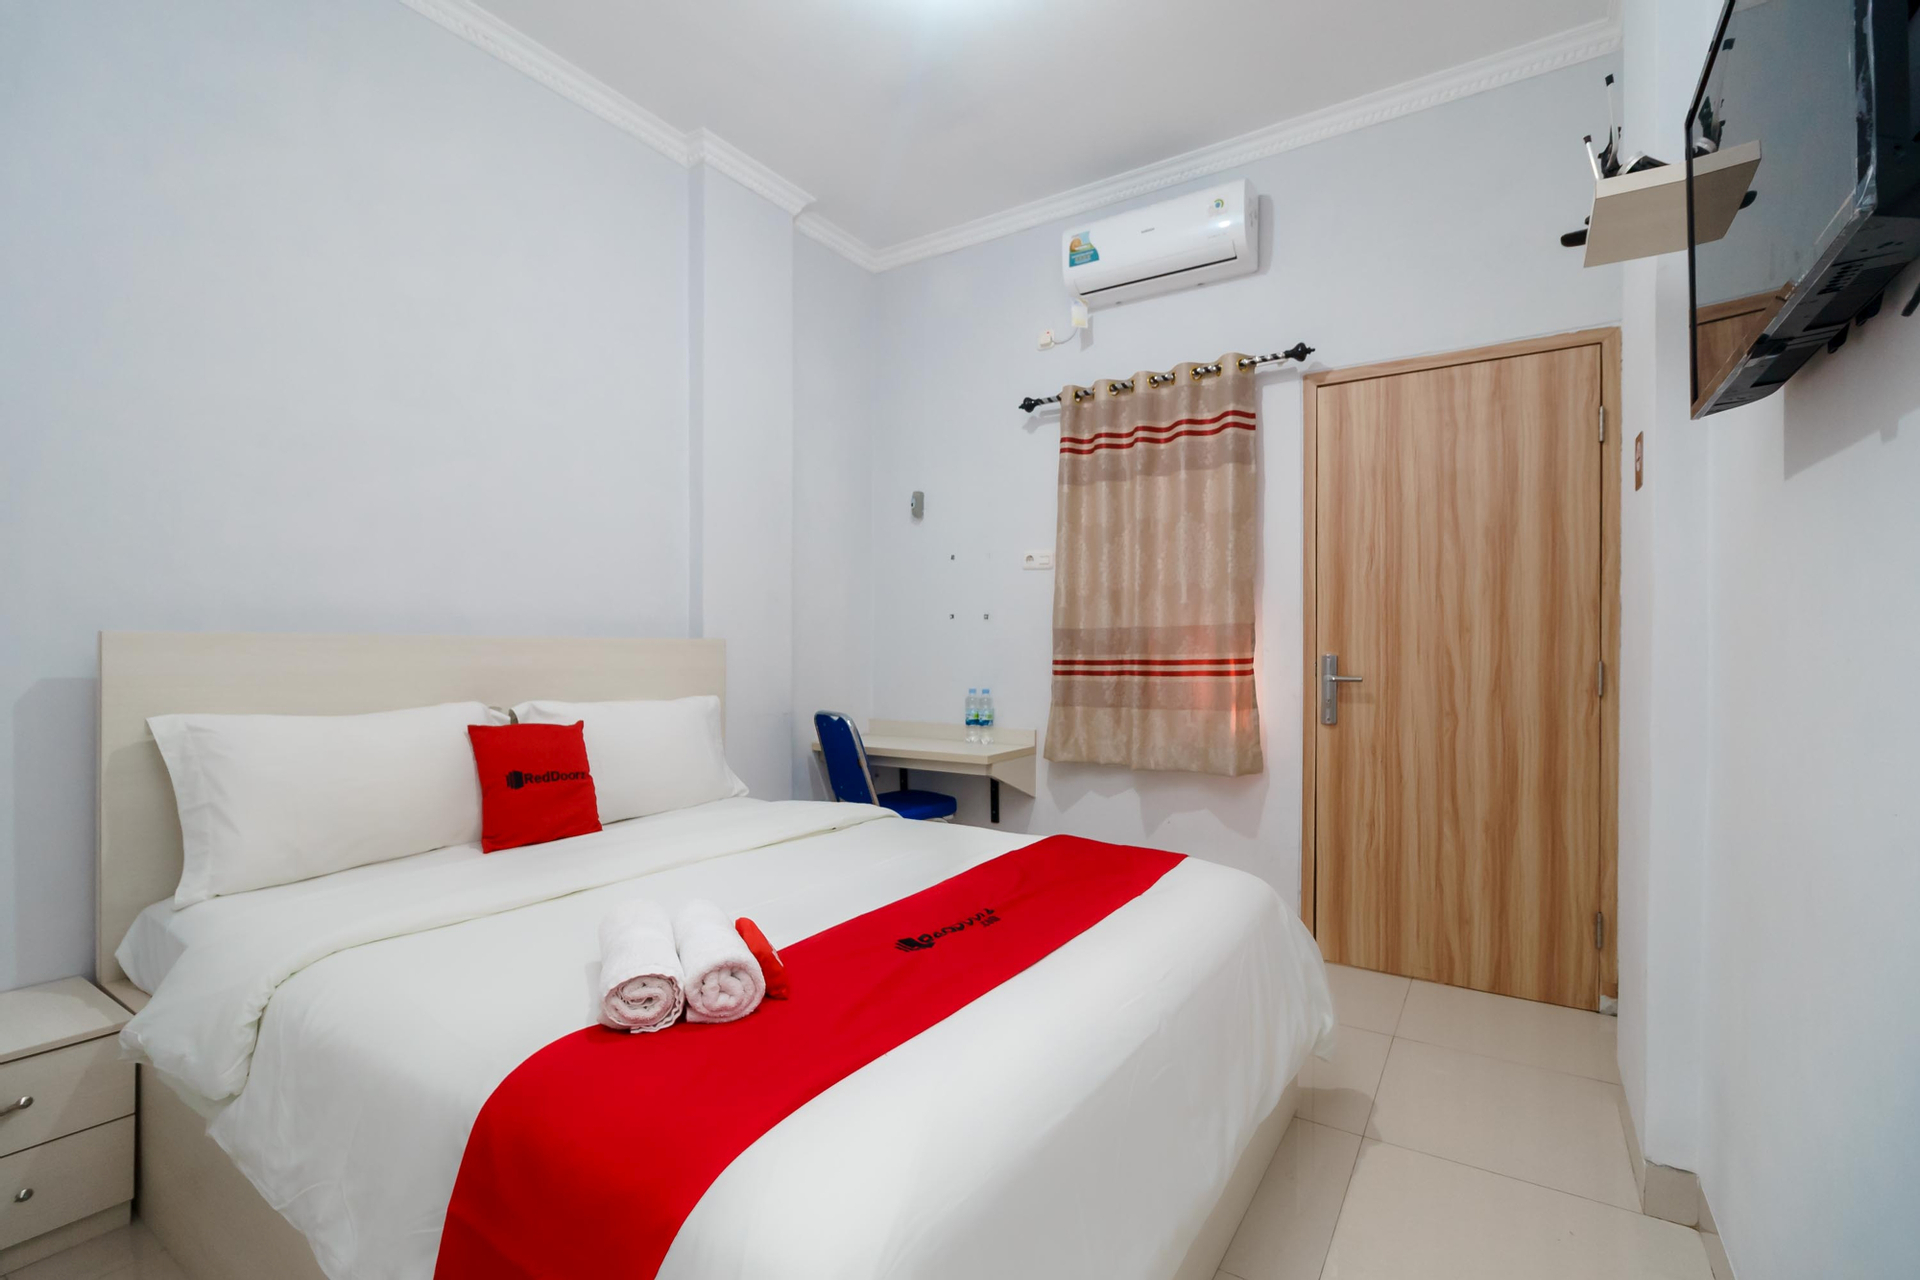 Bedroom 2, RedDoorz Syariah near Jalan Ahmad Yani Banjarmasin 3, Banjar